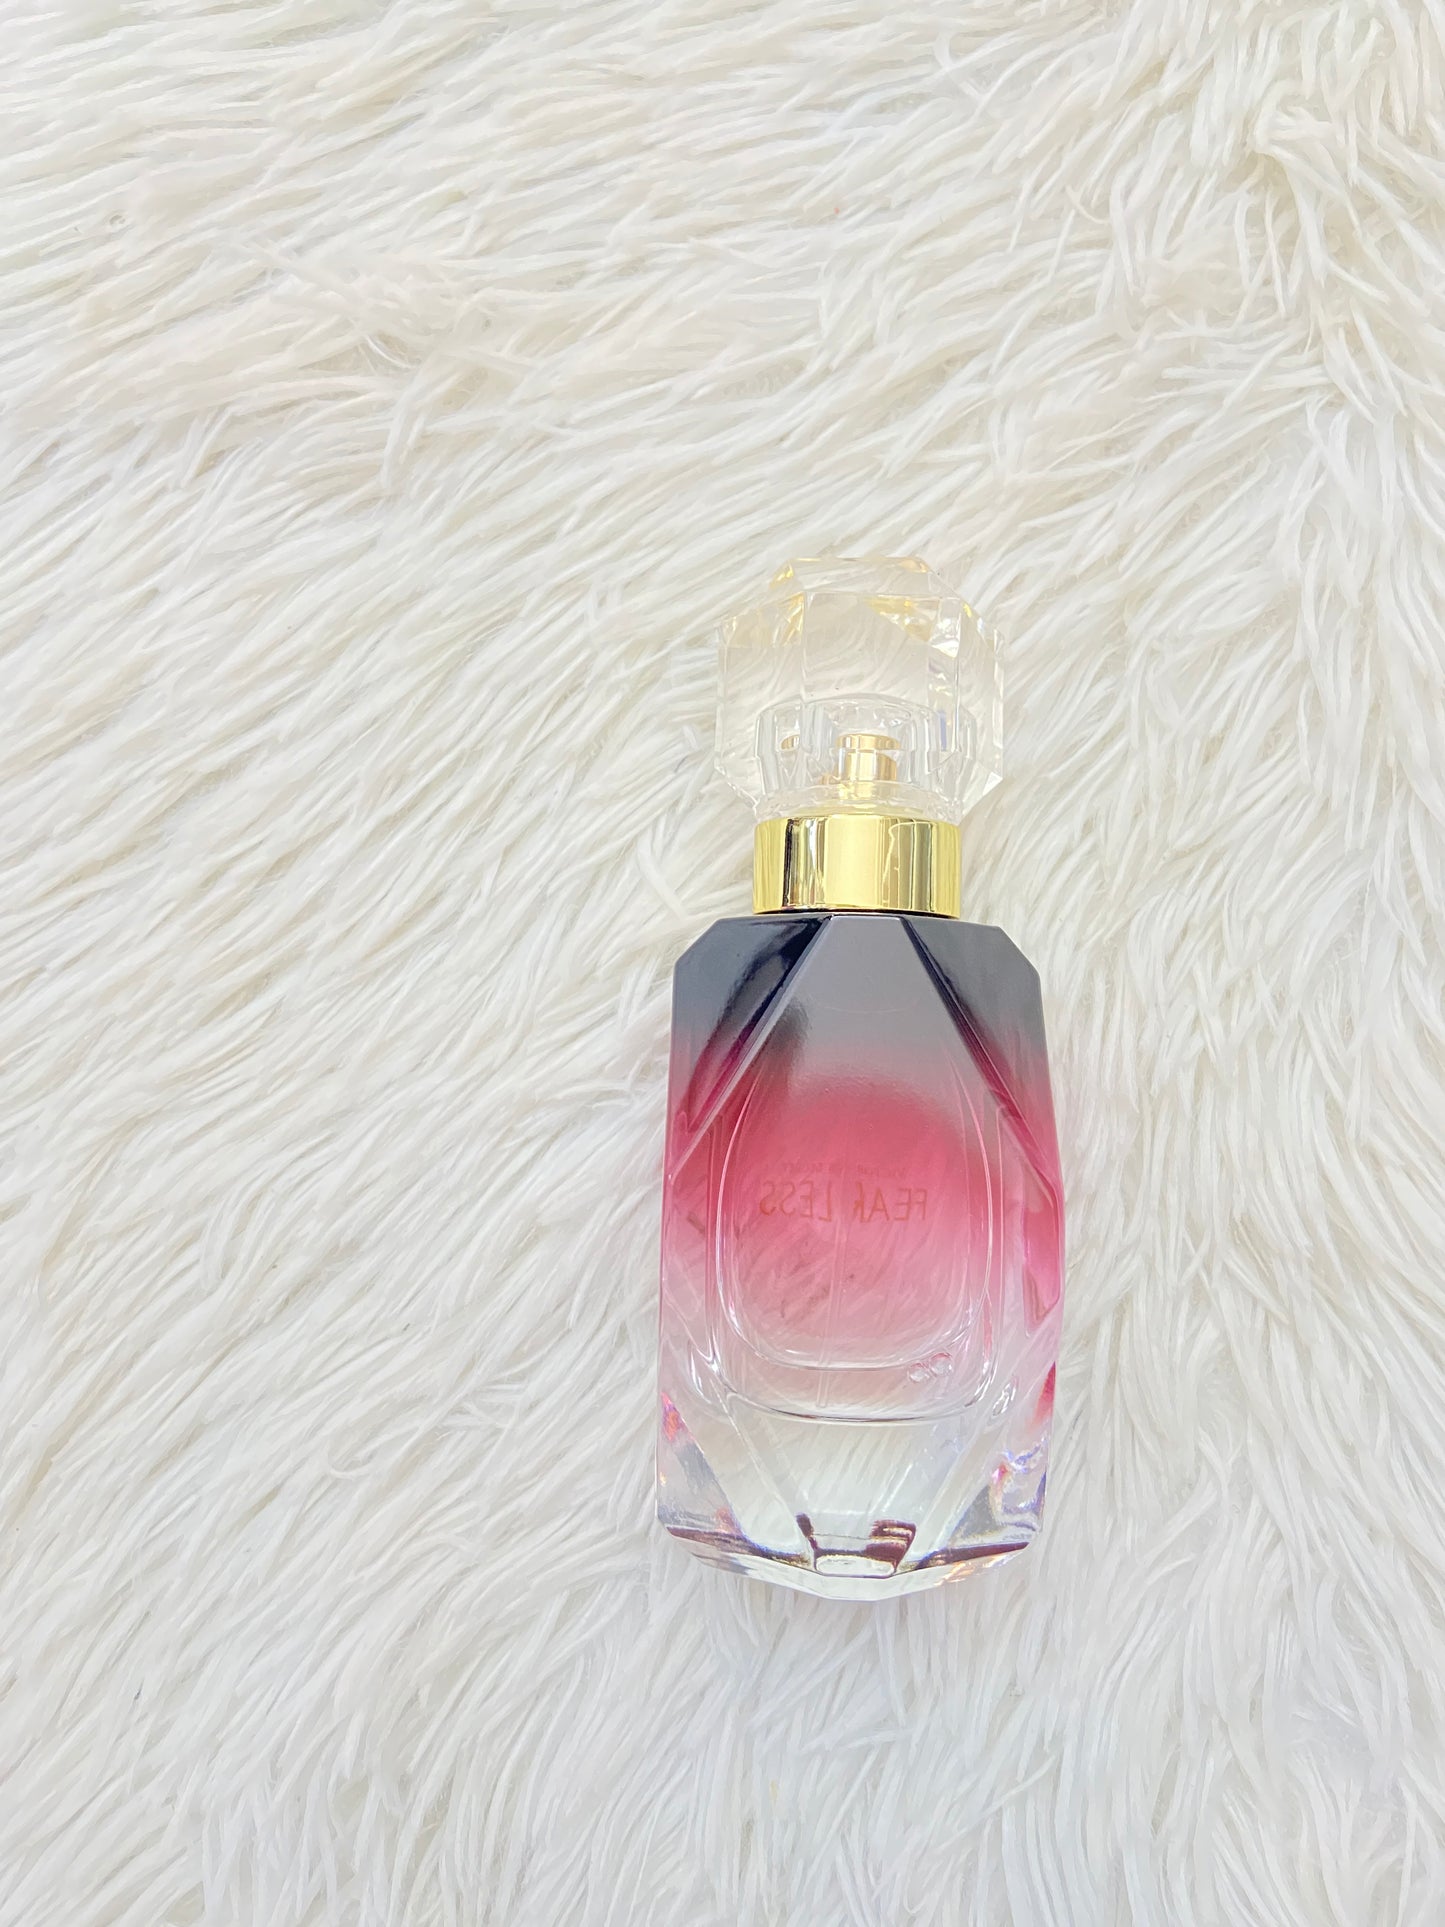 Perfume Victoria’s Secret original morado, FEARLESS.